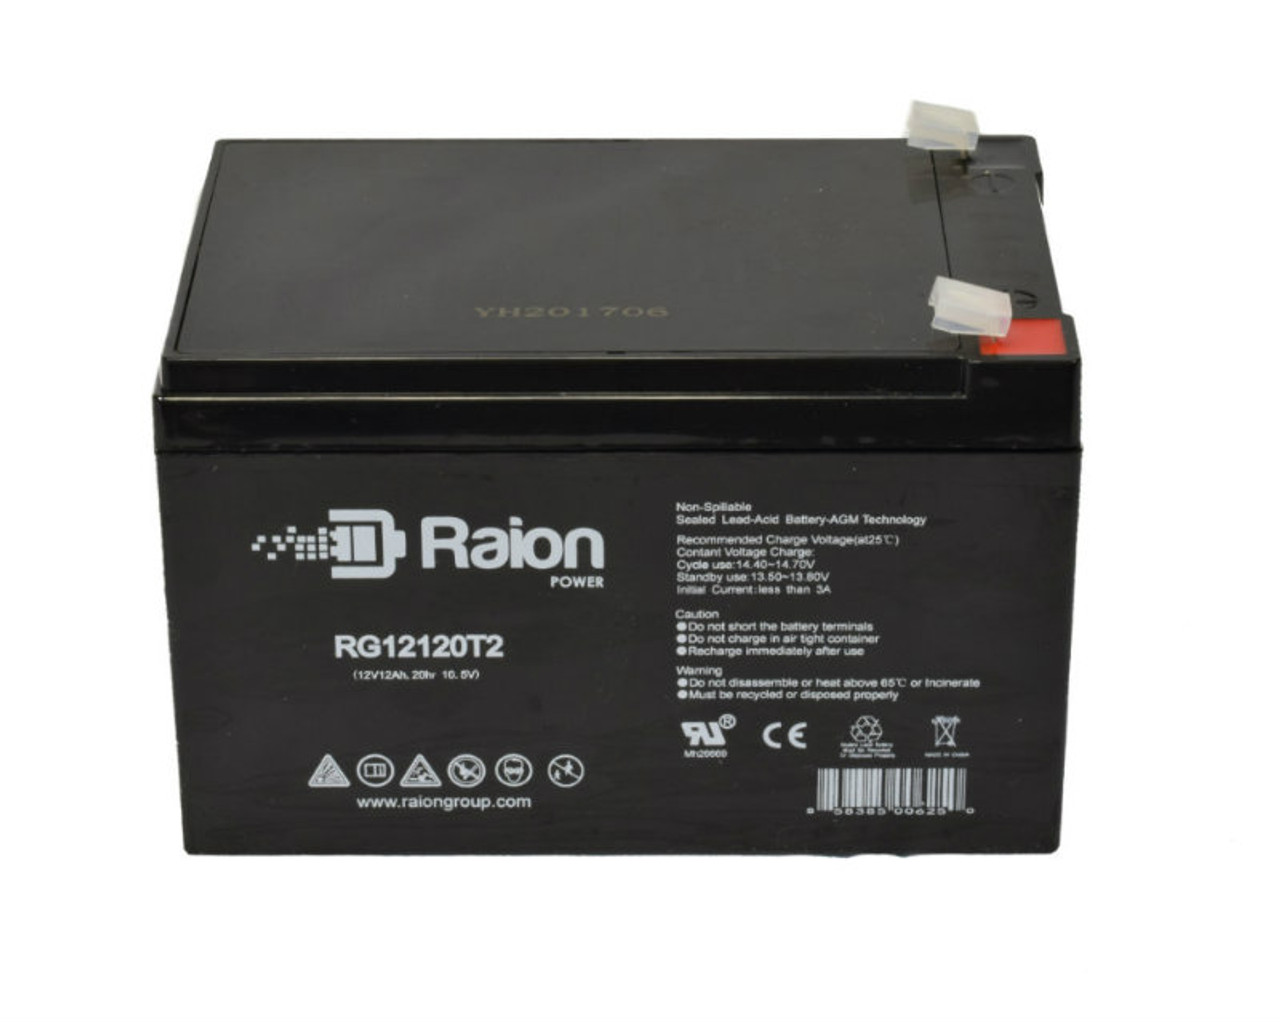 Raion Power RG12120T2 SLA Battery for Drive Medical Spitfire EX2 3-Wheel